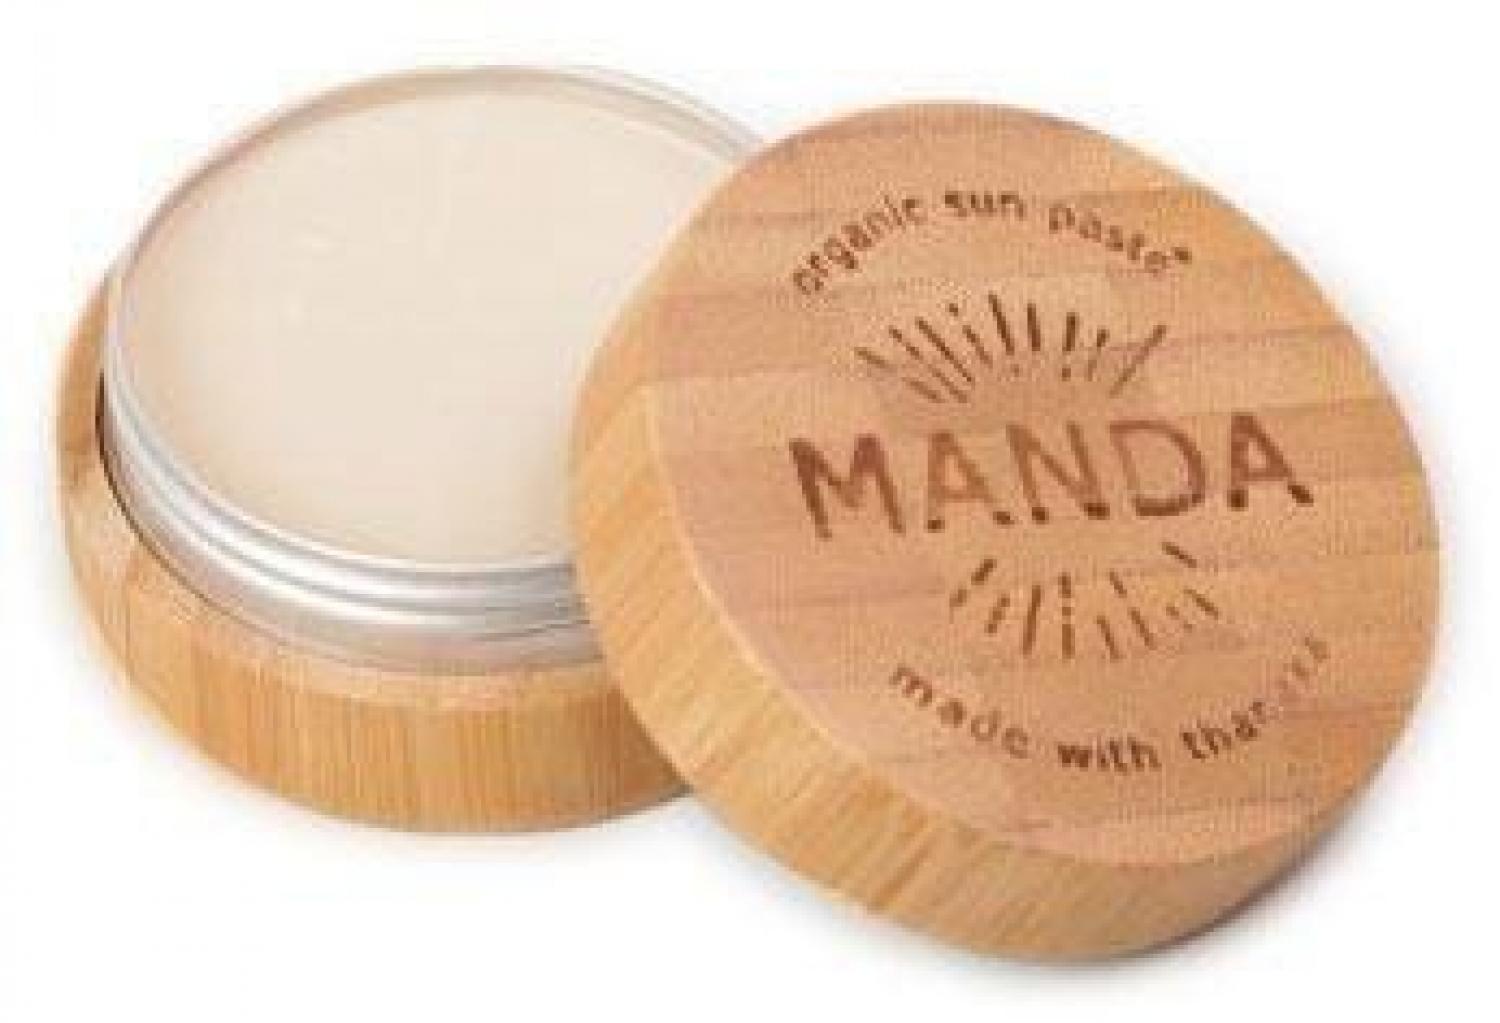 Manda Organic Sun Paste (SPF 50) - 40 grams